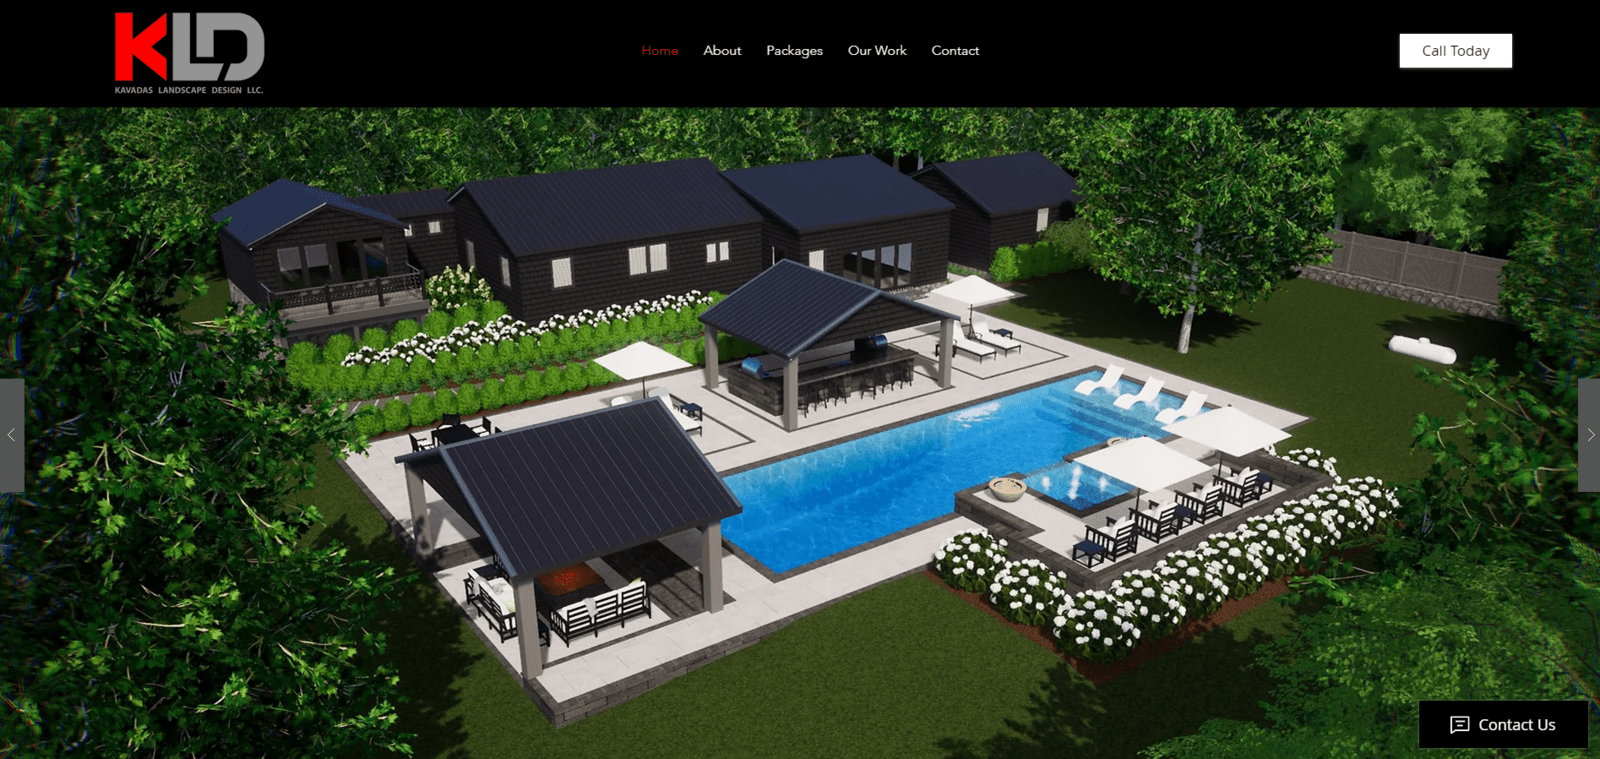 Kavadas Landscape Design Home Page image